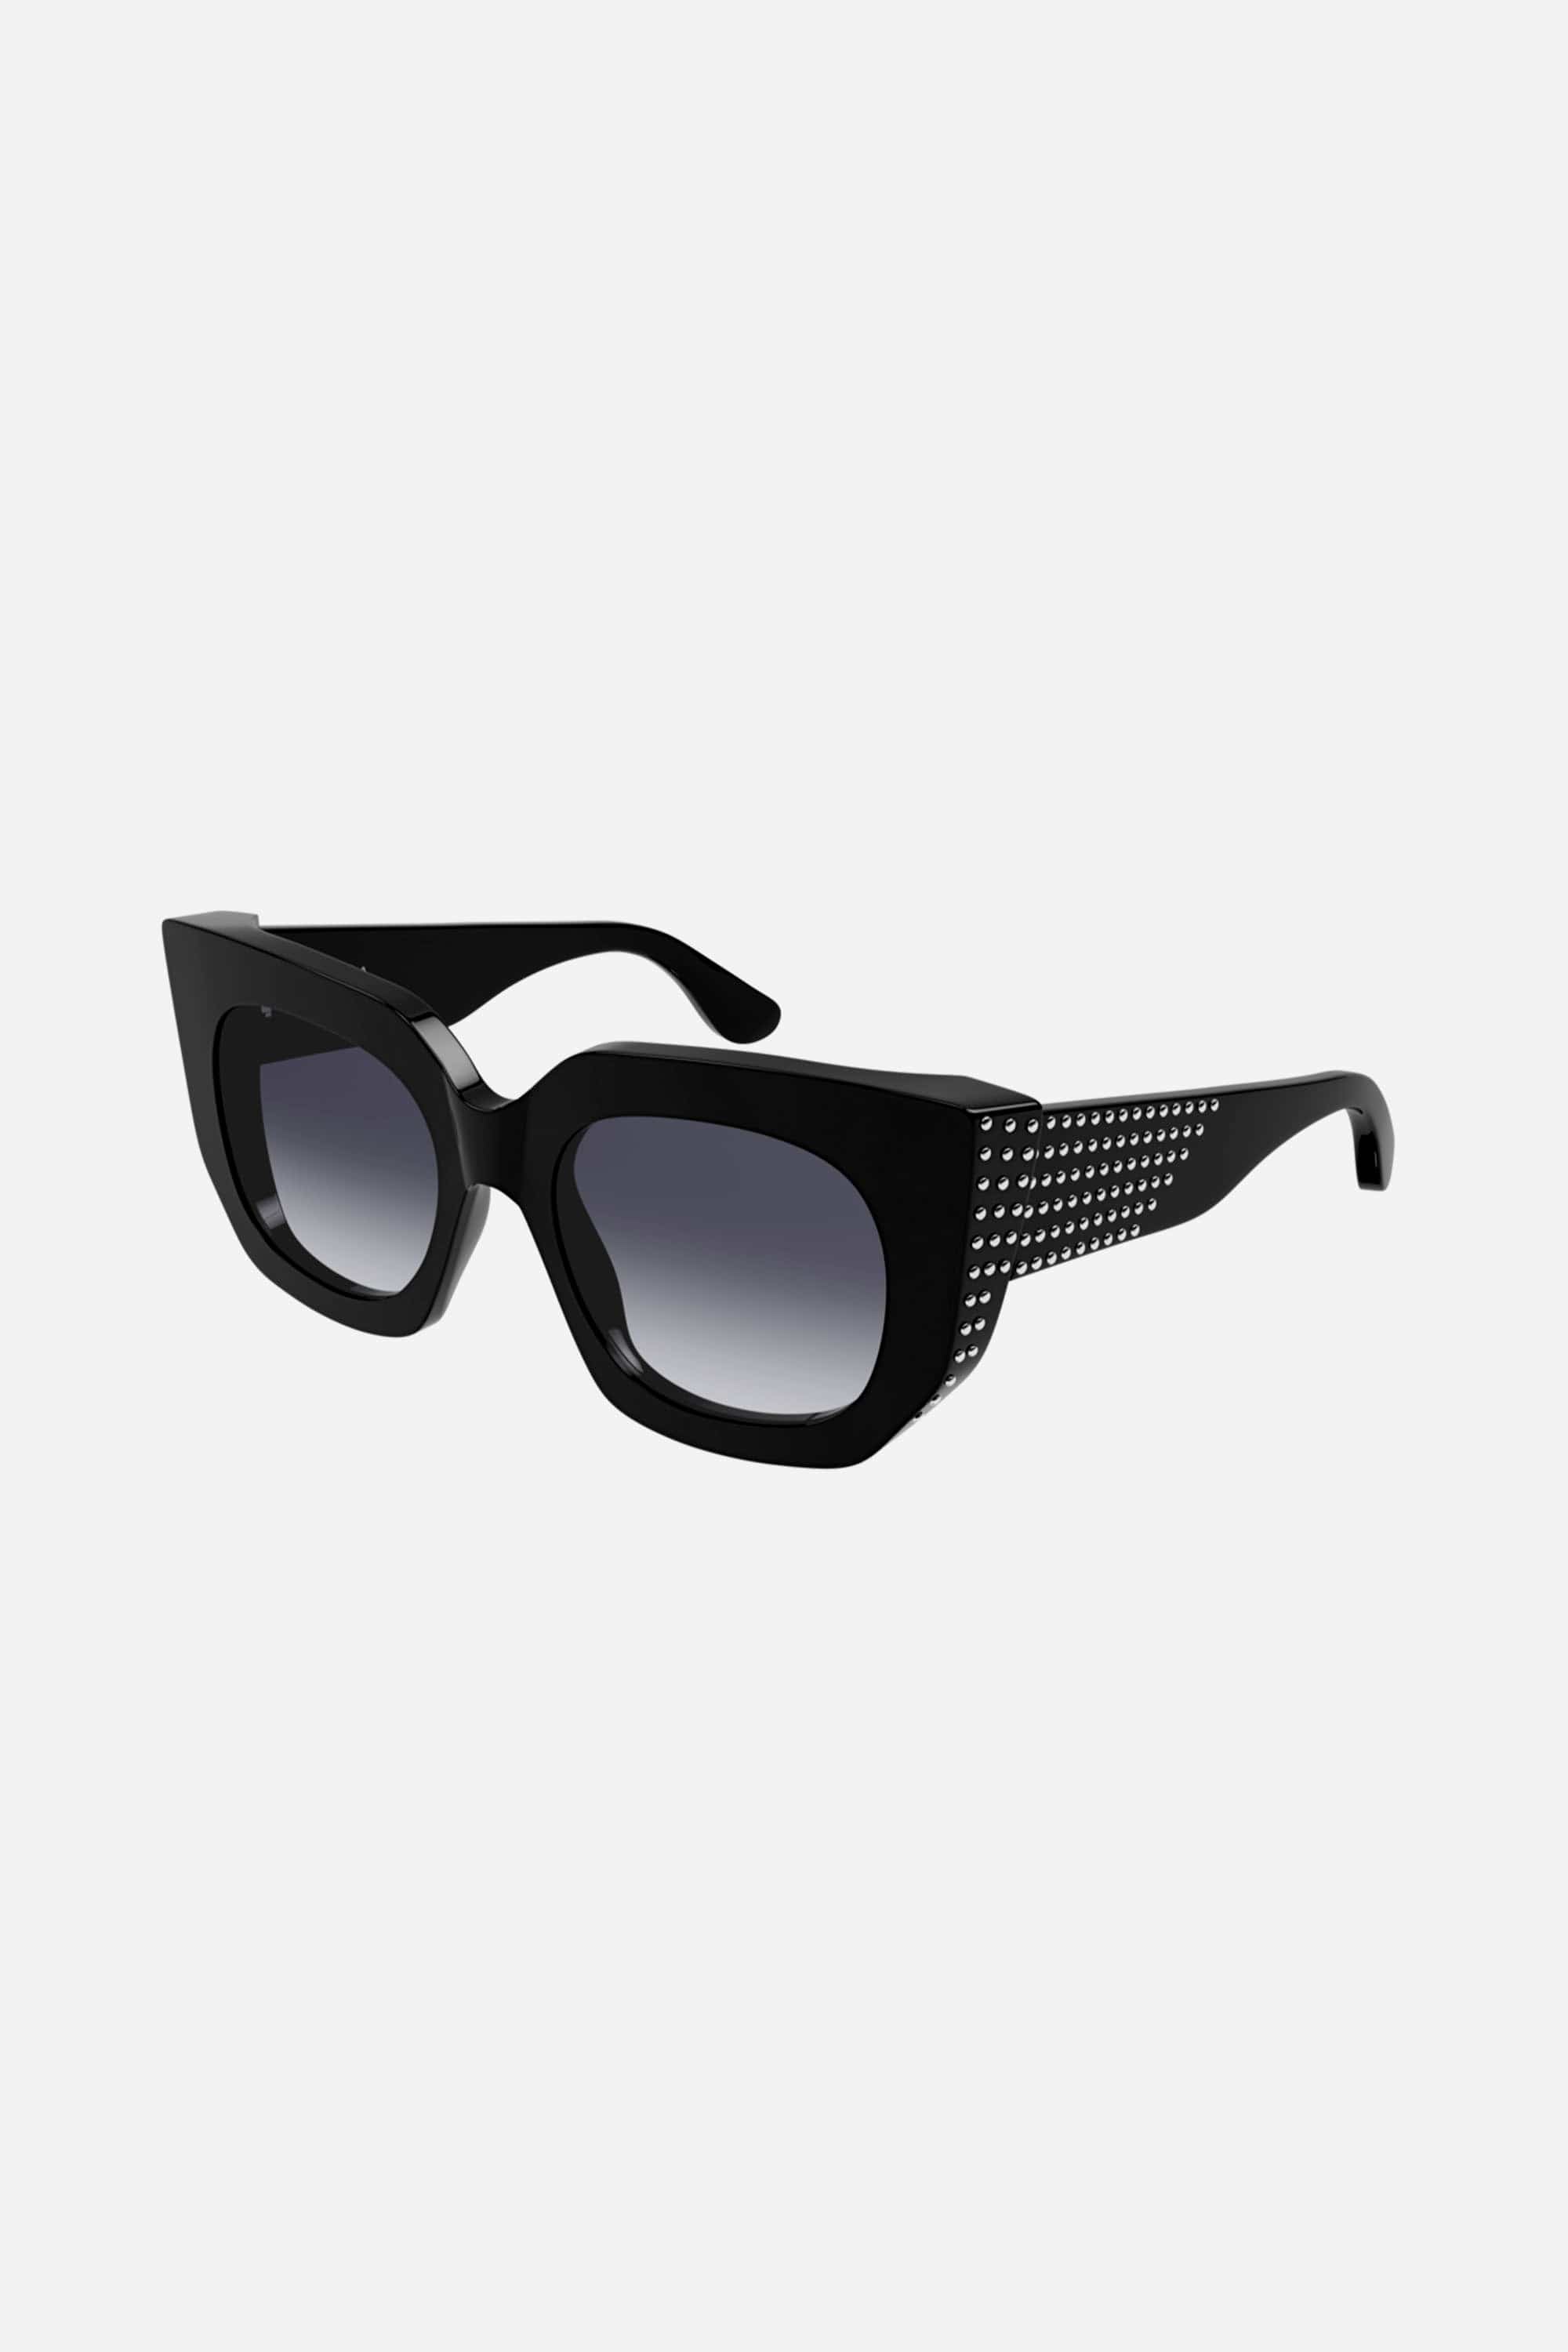 Alaia black oversized cat eye sunglasses - Eyewear Club